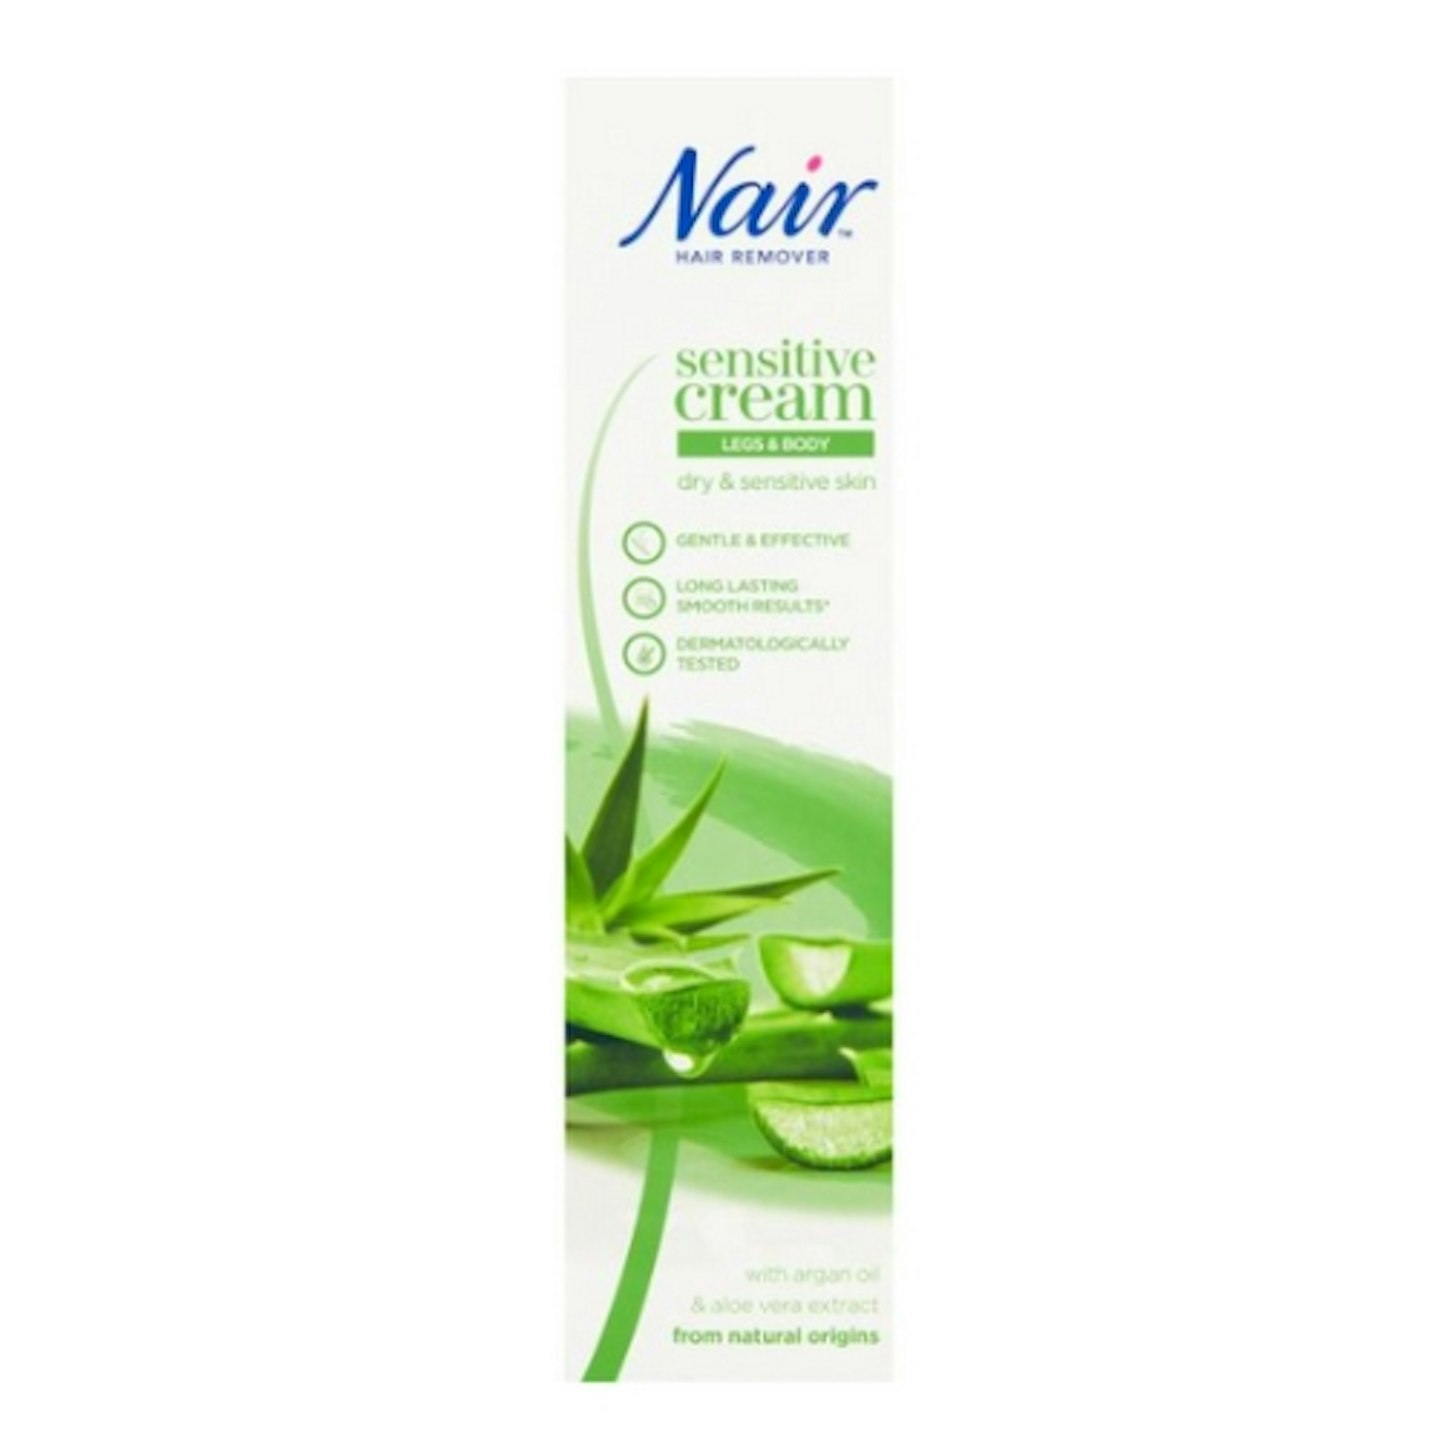 Nair Hair Remover Sensitive Cream 100ml